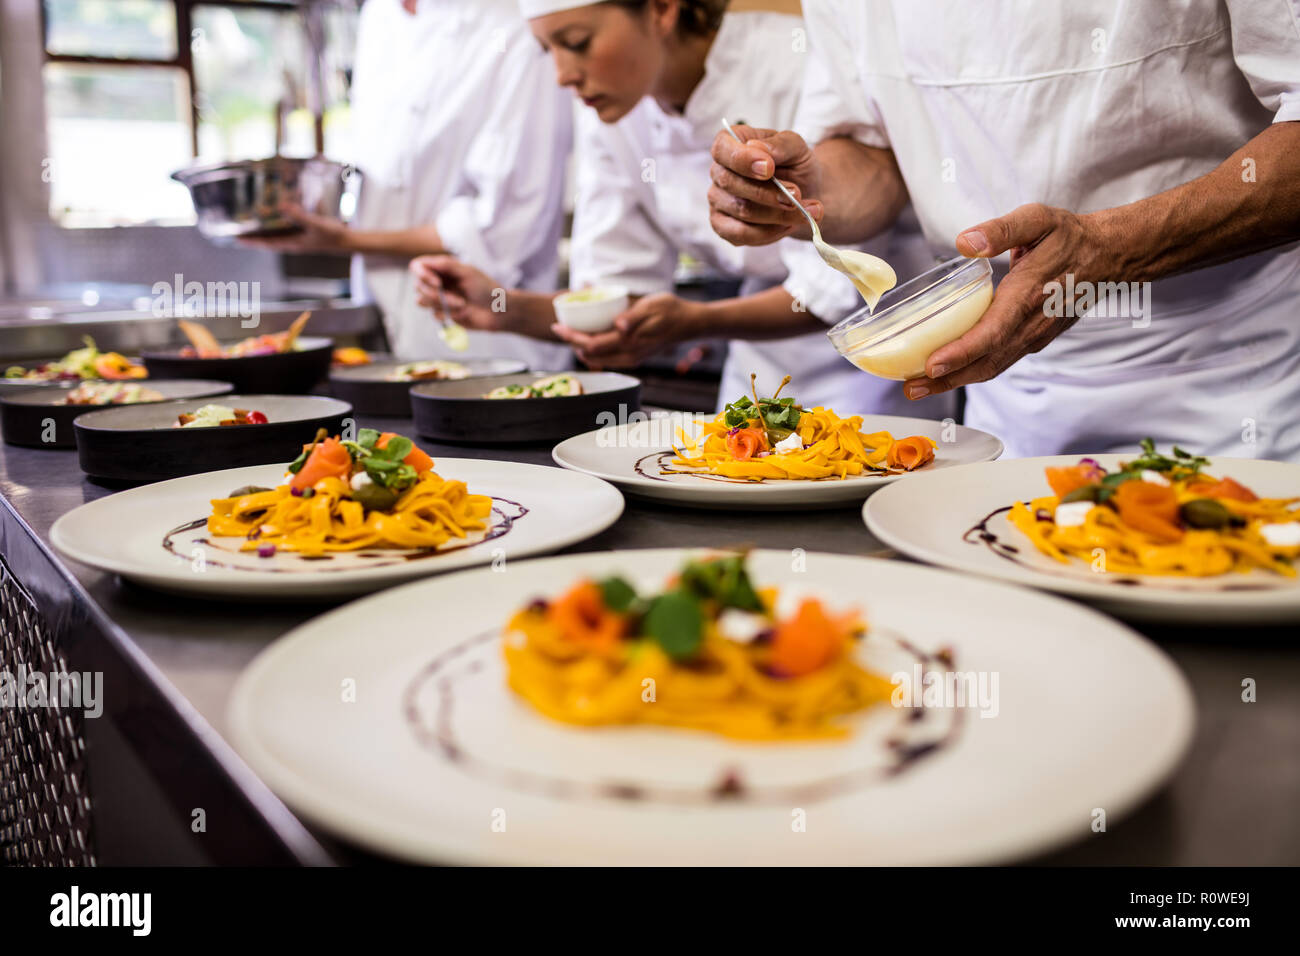 https://c8.alamy.com/comp/R0WE9J/chef-garnishing-food-on-plates-R0WE9J.jpg